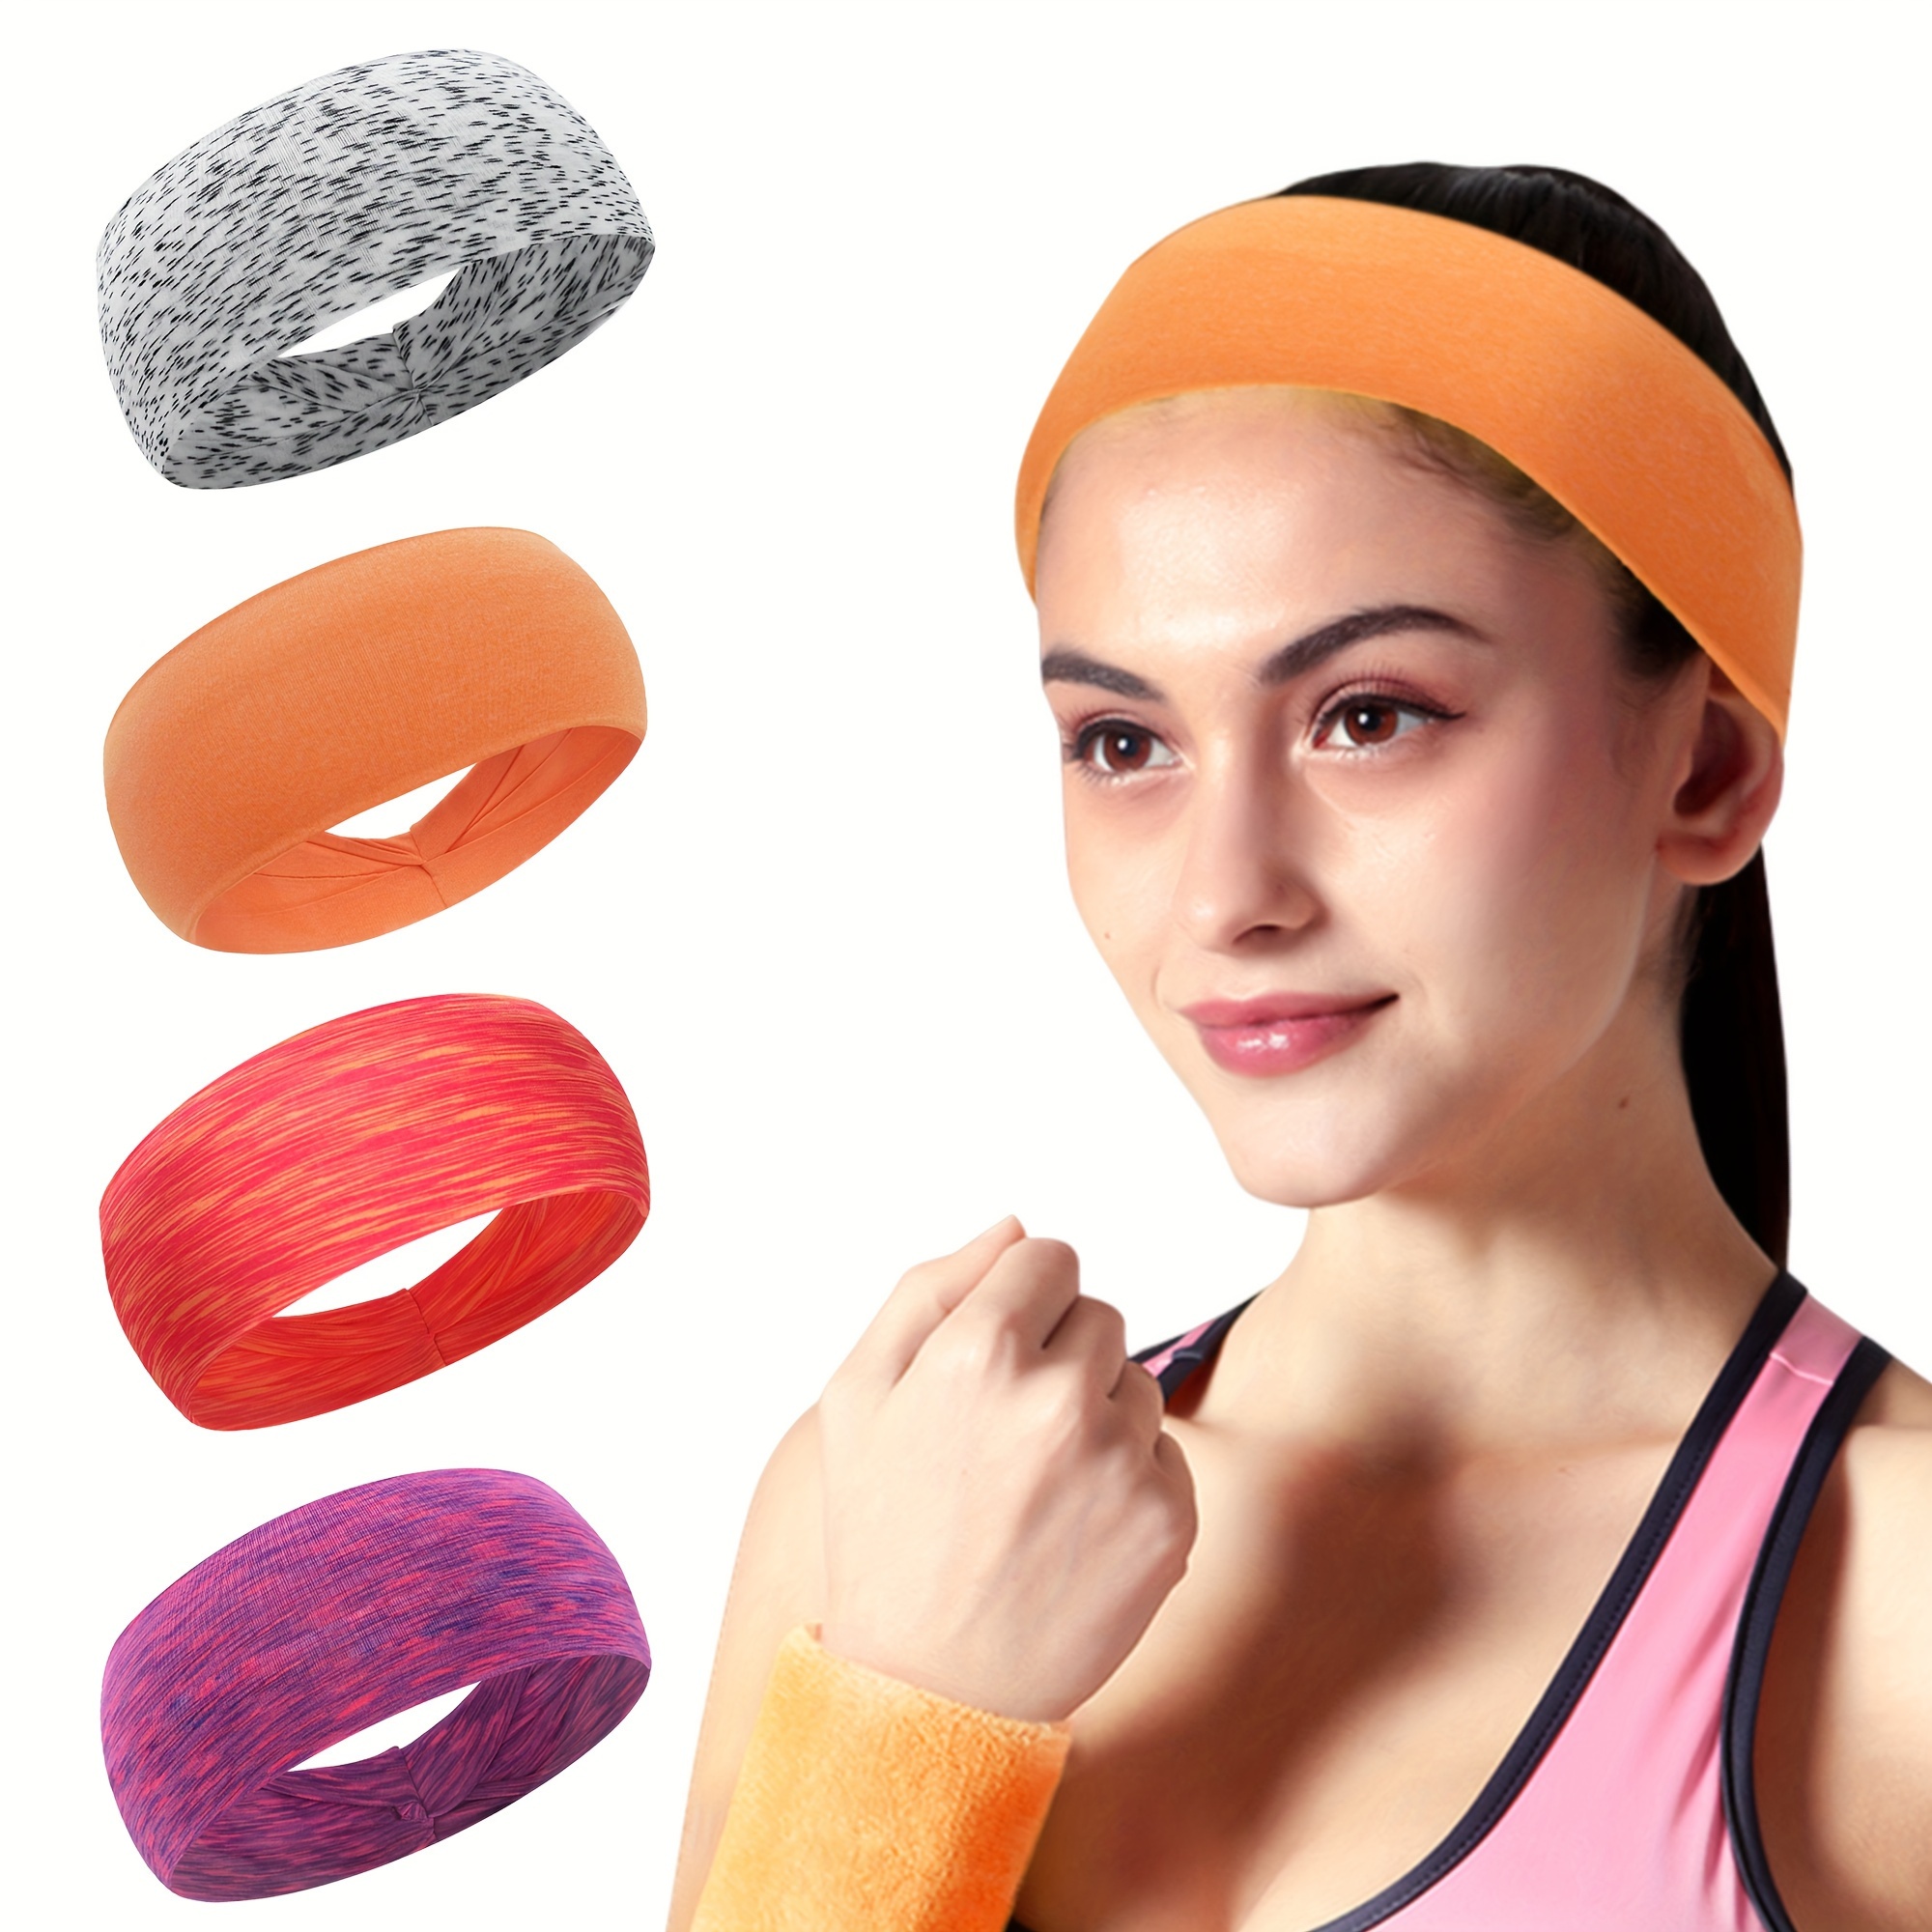 

4pcs/set Sports Headbands Non Slip Sweatbands Soft Elastic Head Wraps Headwear Hair Styling Accessories For Yoga Running Workout Wear